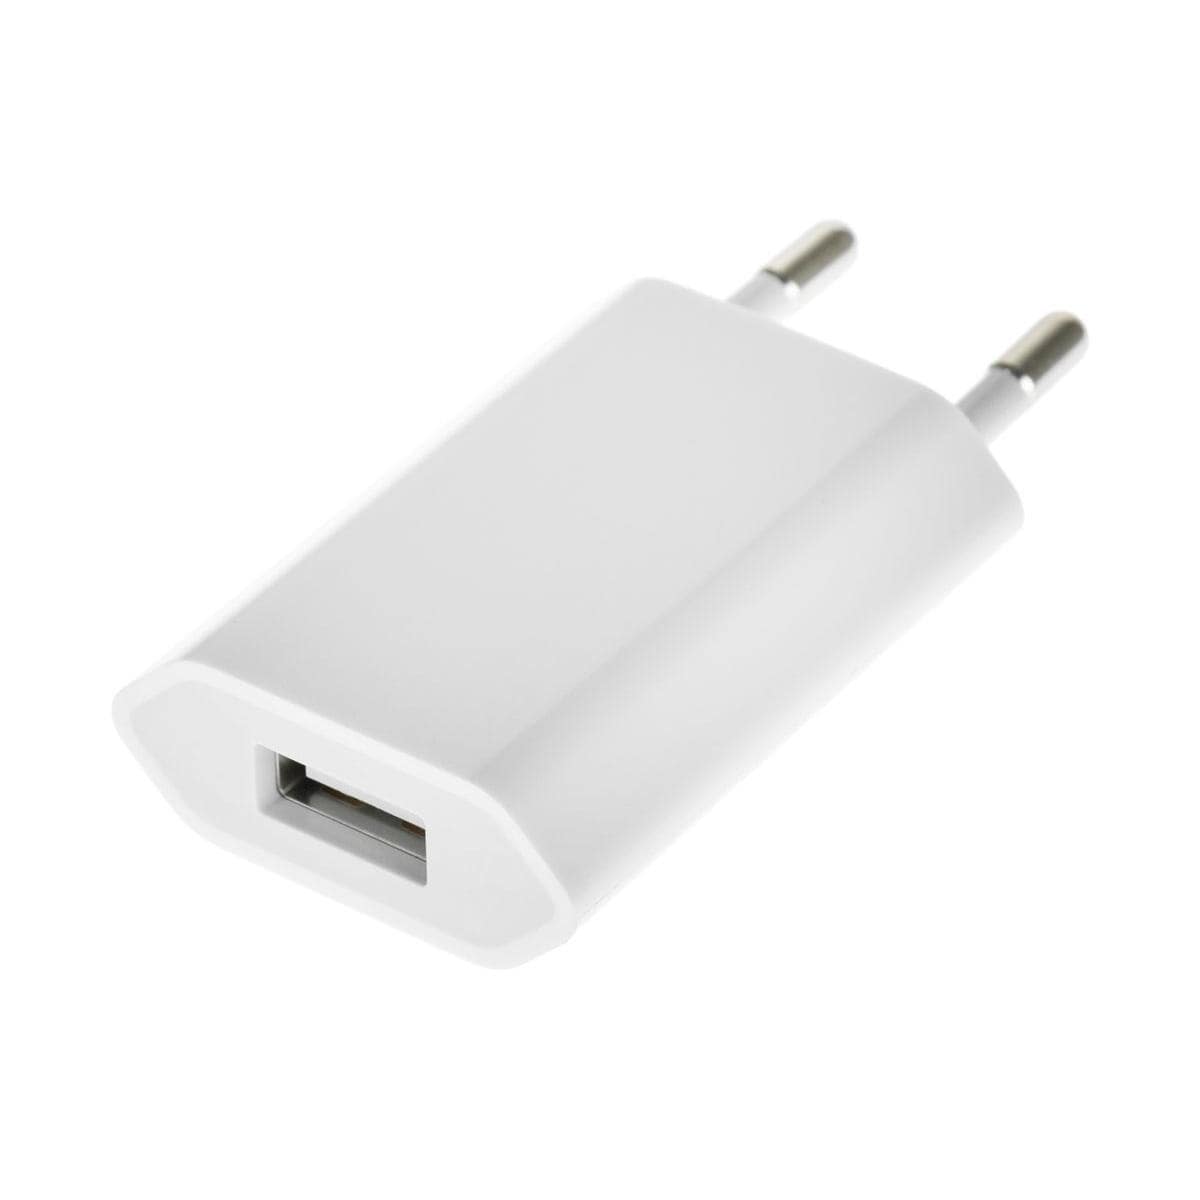 Apple USB power adapter 1A